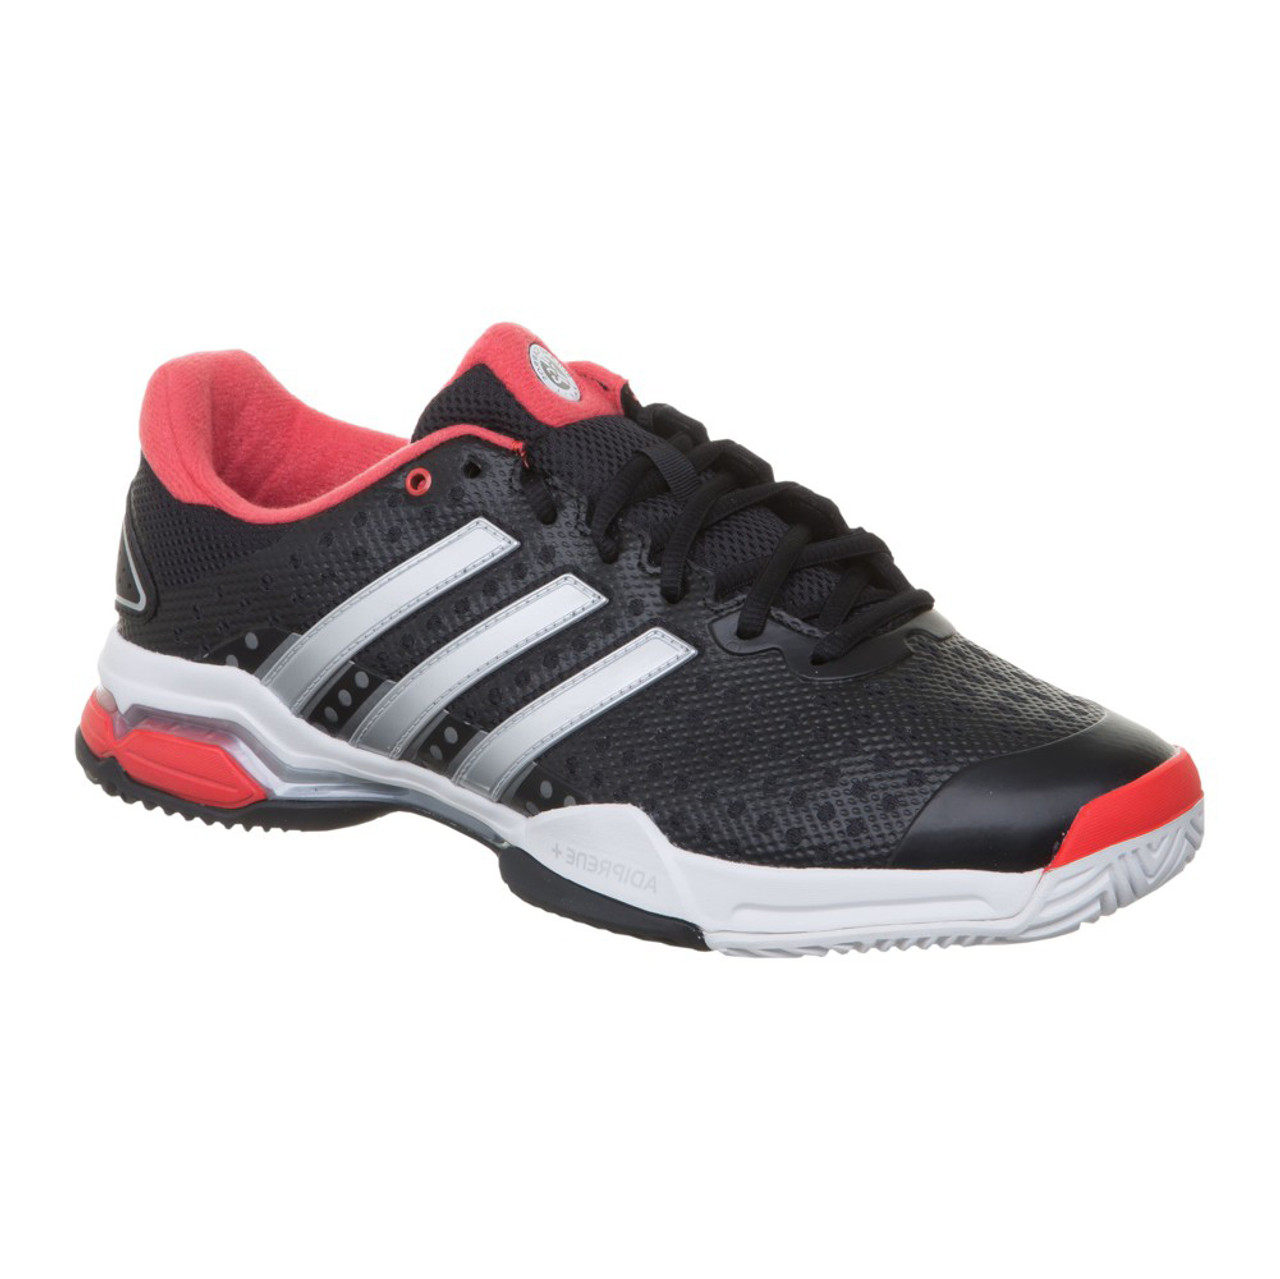 Adidas Men's Barricade Team Tennis Shoe - Black | Discount Adidas Men's Athletic Shoes & More - | Shoolu.com